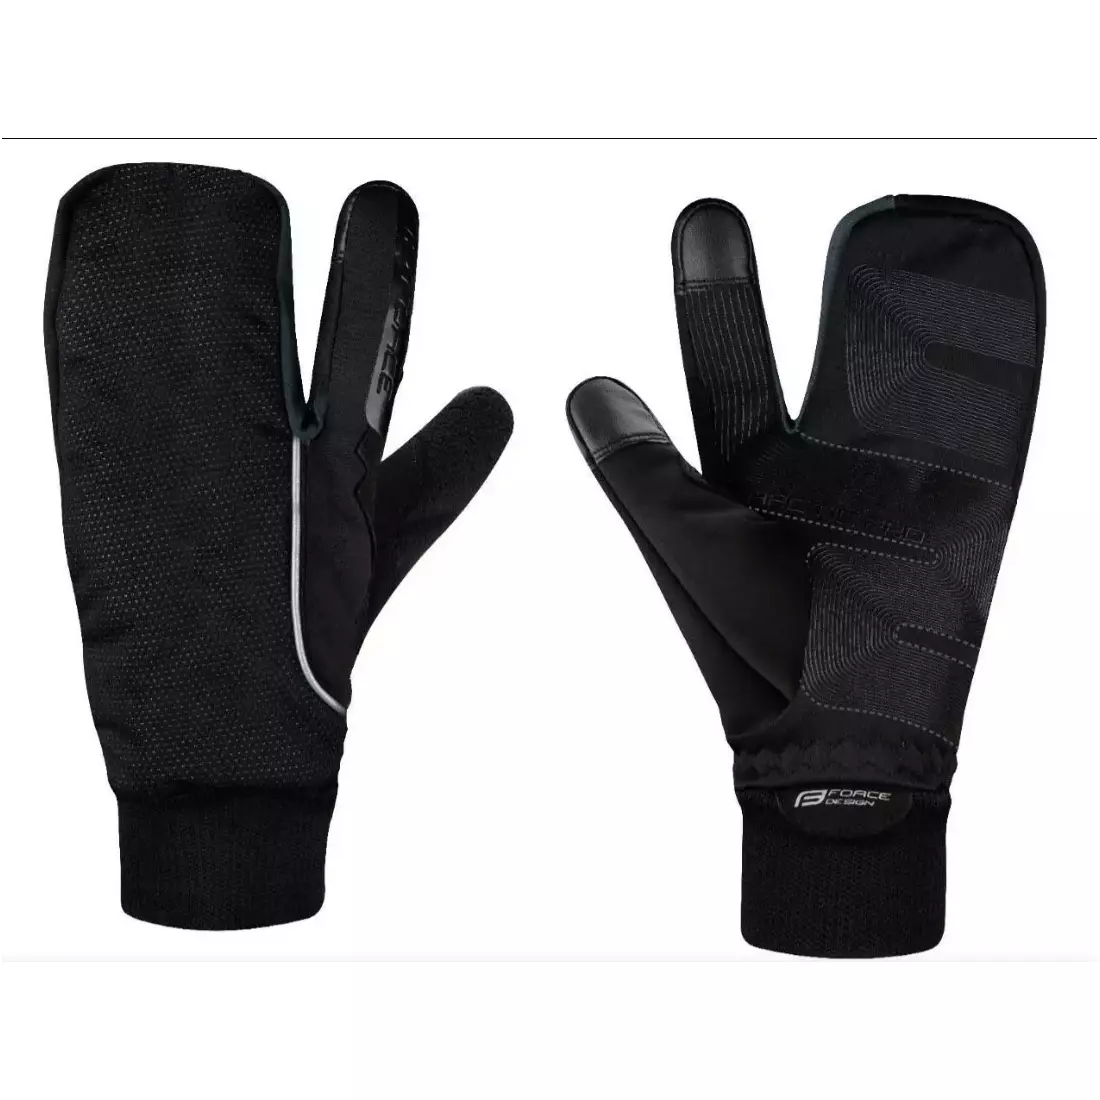 FORCE HOT RAK PRO winter cycling gloves, black